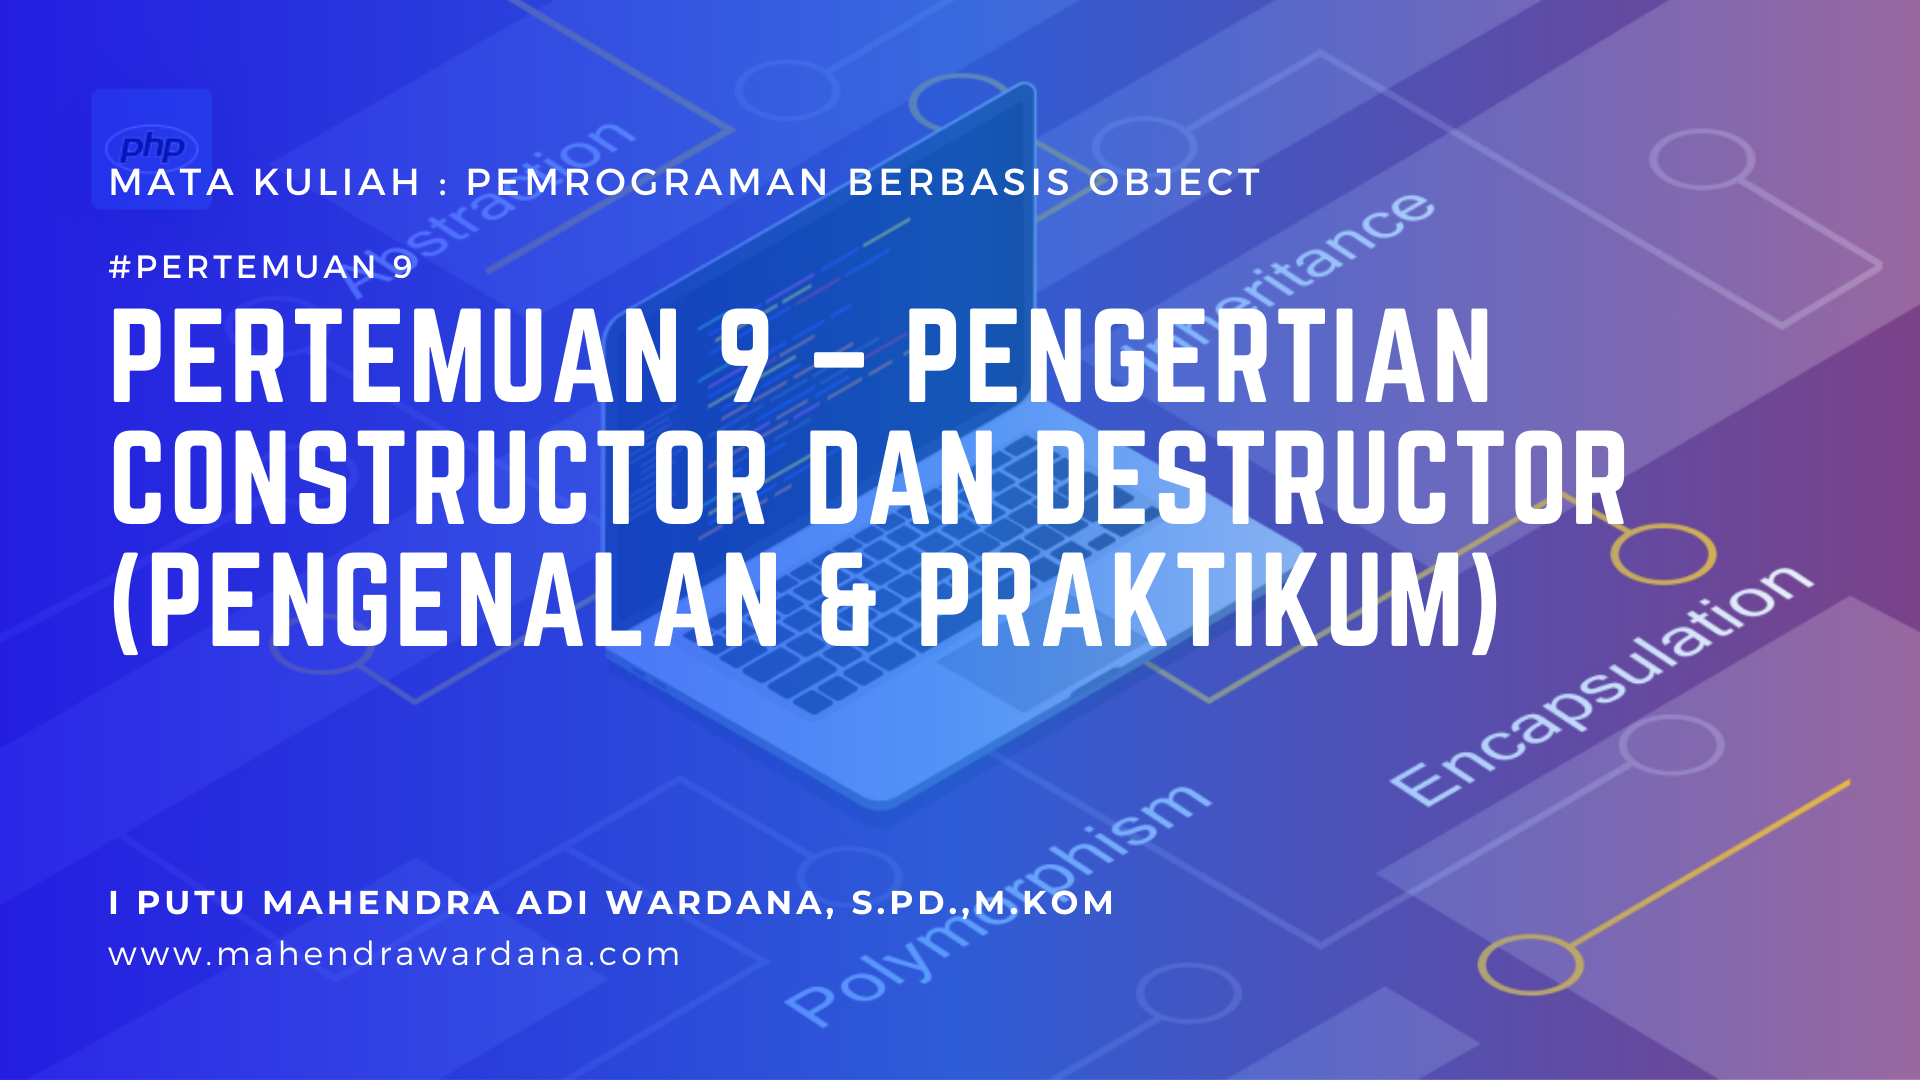 Pertemuan 9 - Pengertian Constructor dan Destructor (Pengenalan & Praktikum)